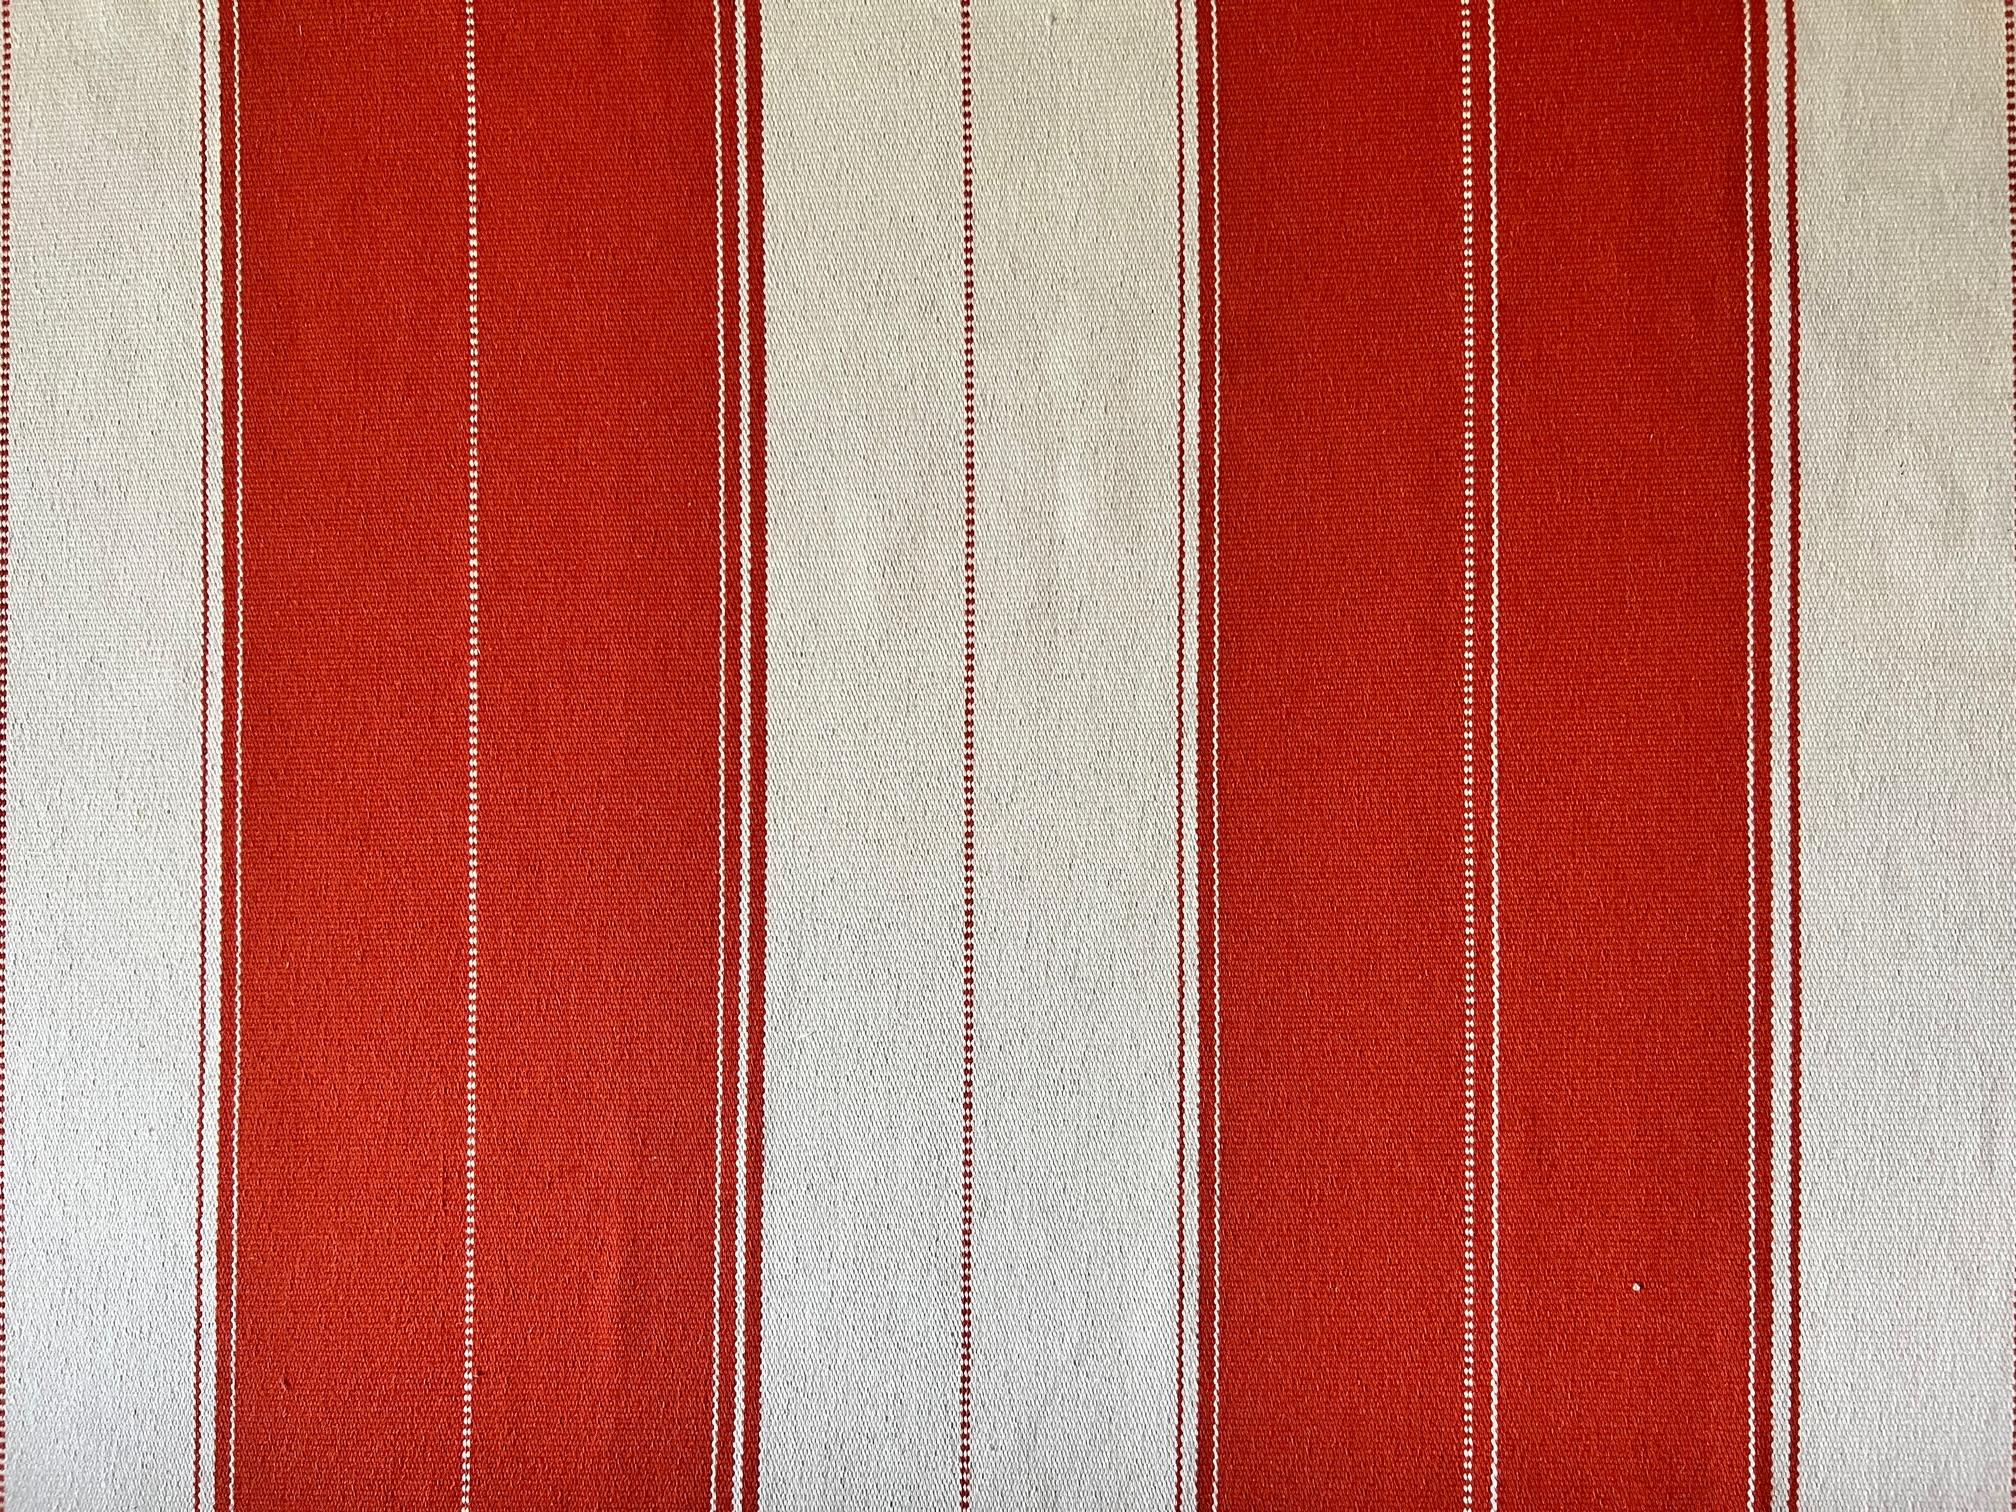 Modern Striking Orange and White Wool Striped Rug by Swedish Rug Maker Kasthall